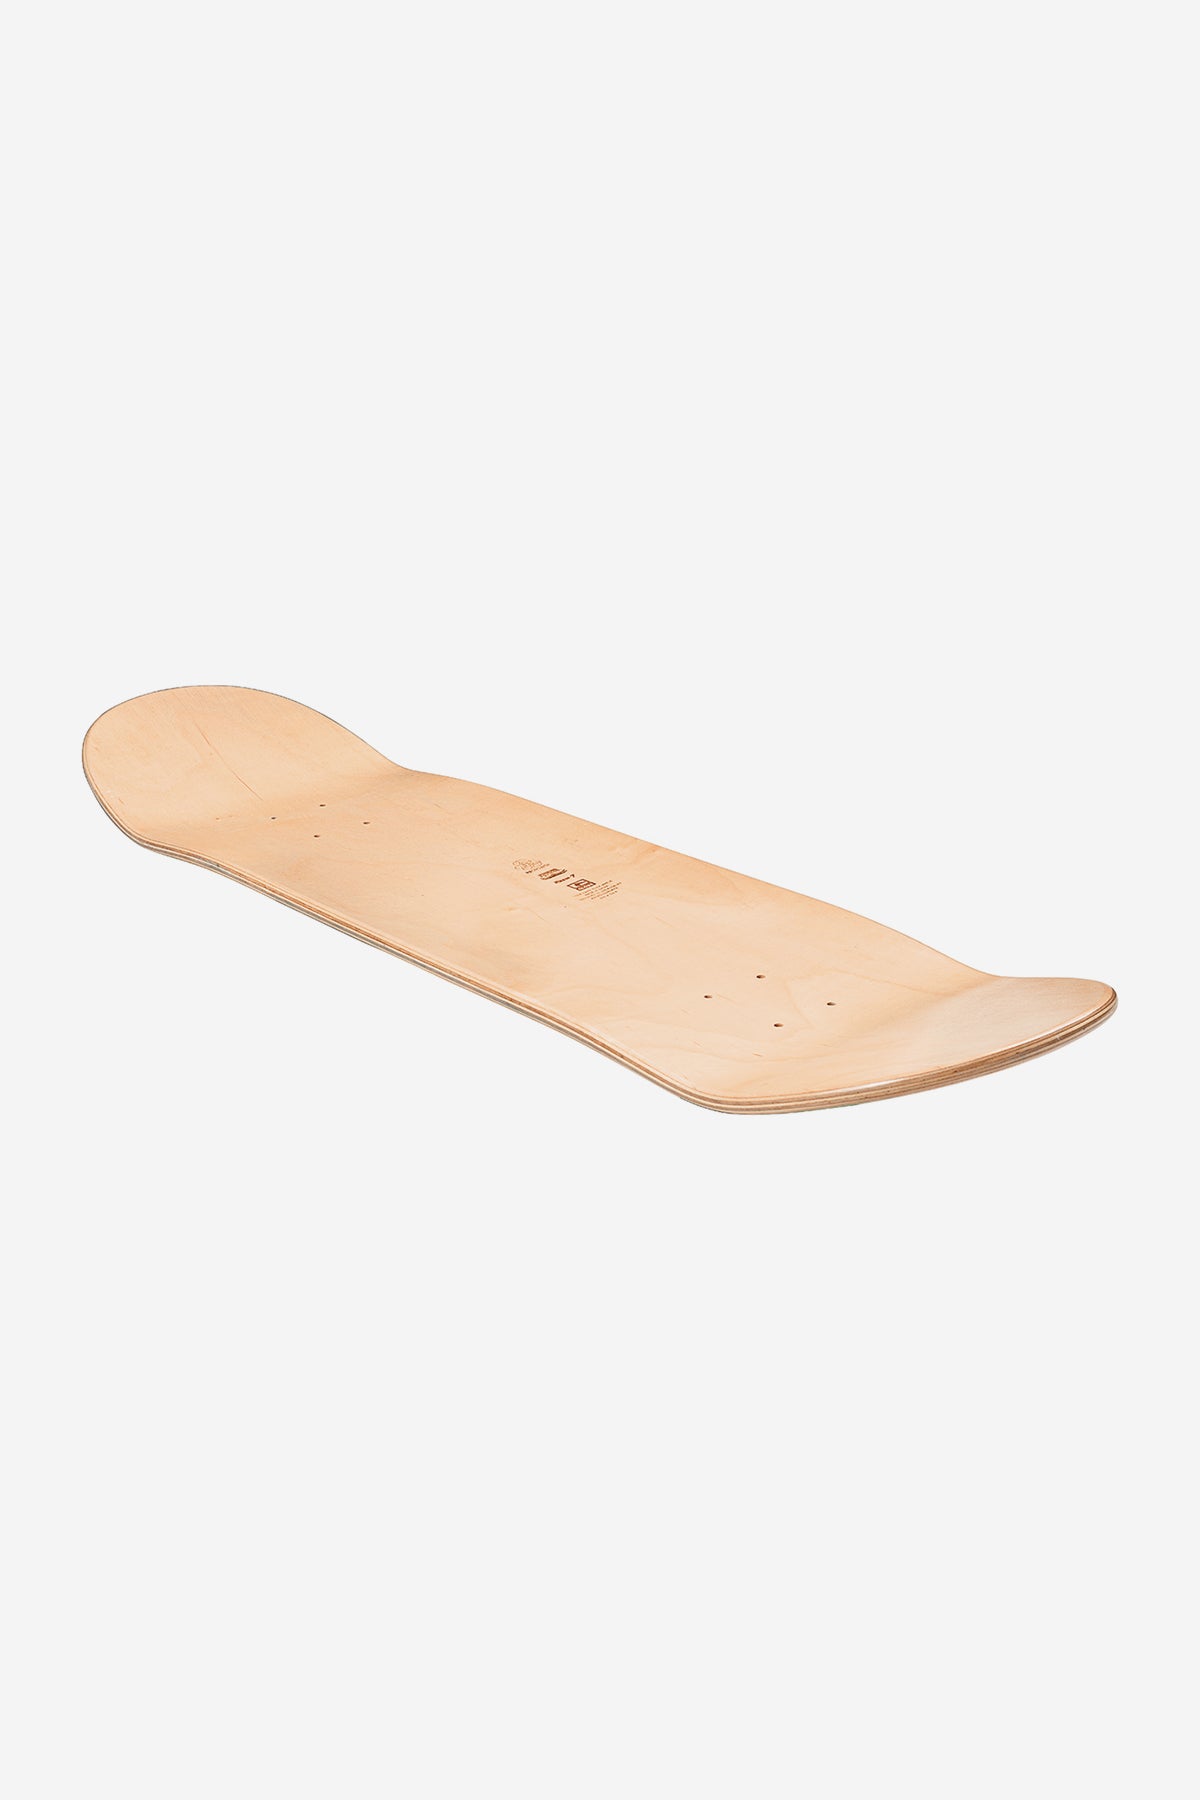 Globe - Gutstock - Aus White- 8.0" Skateboard Deck